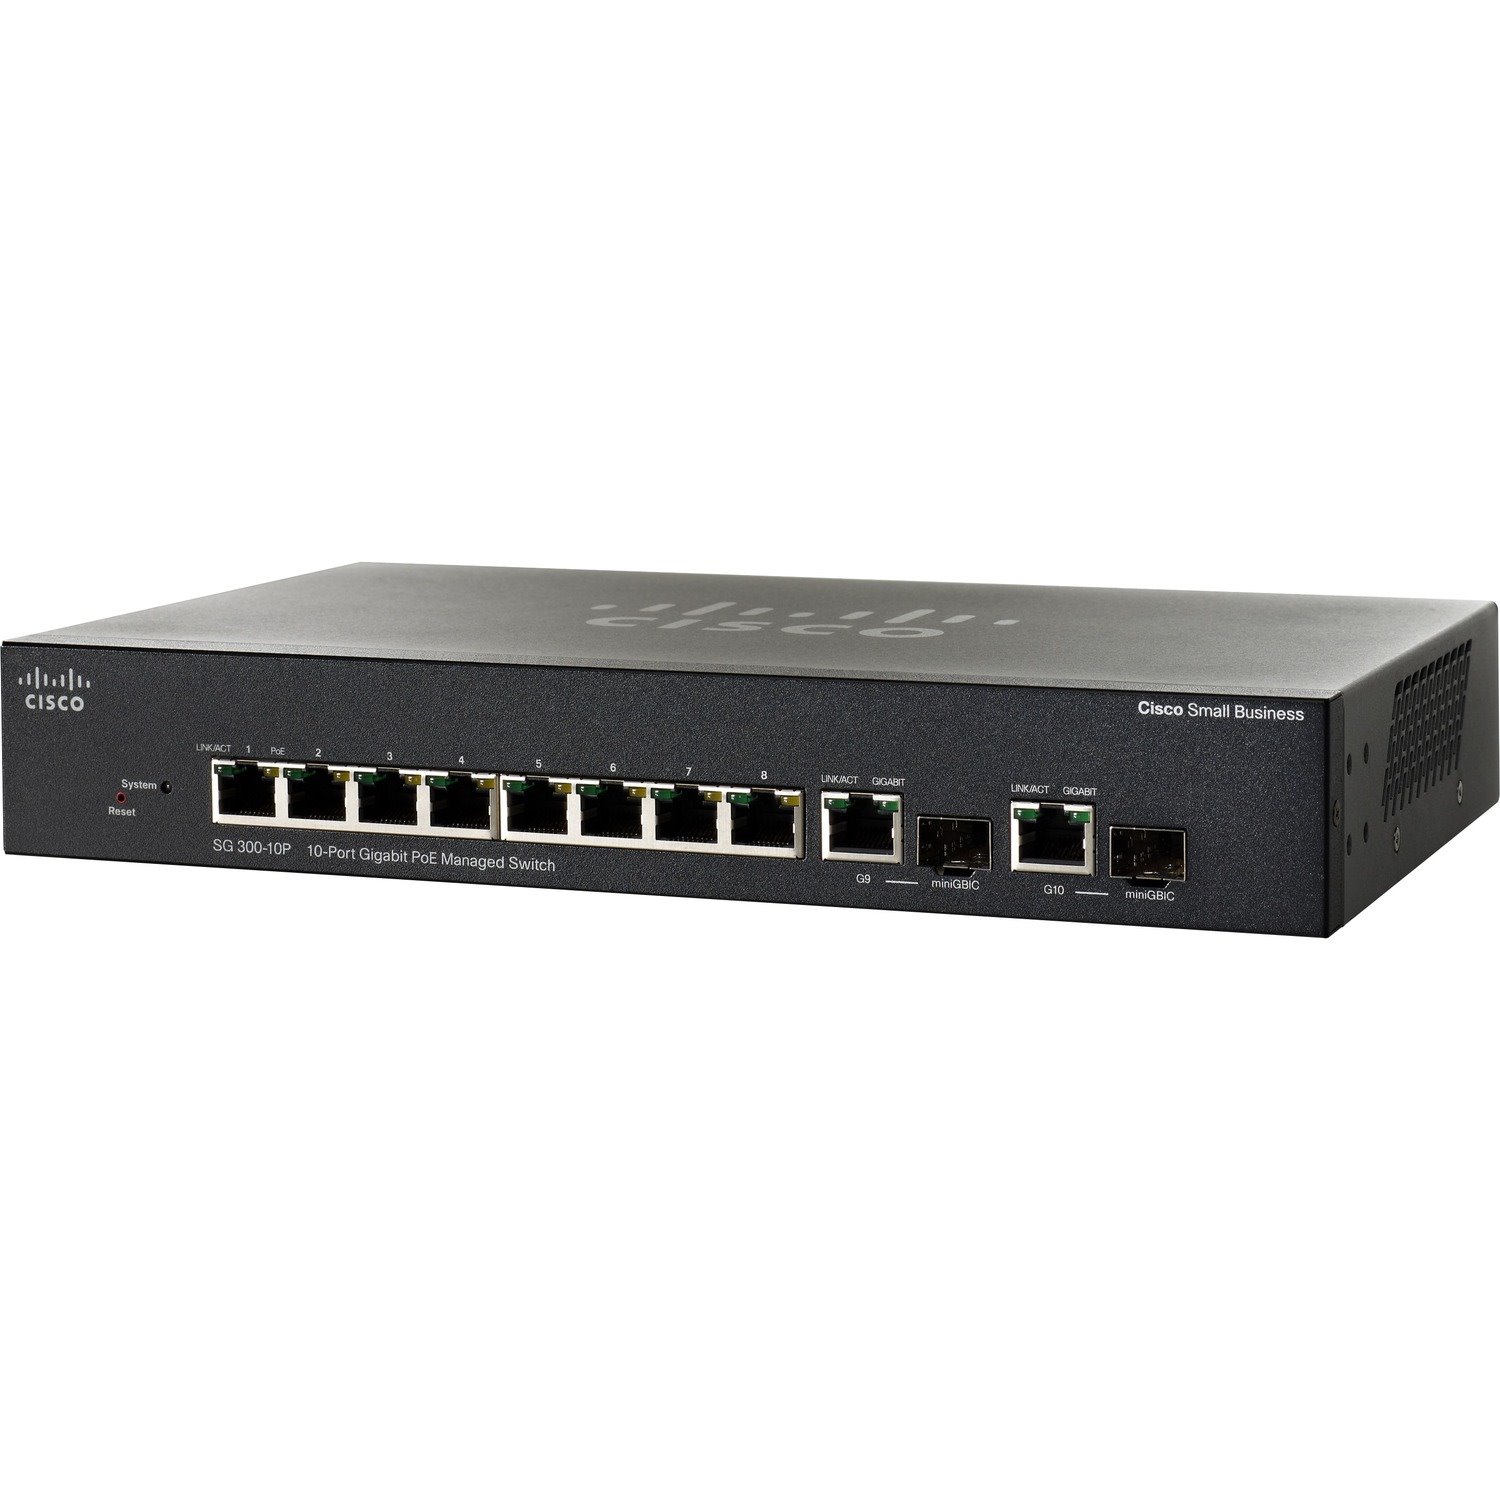 Cisco SG300-10 10 Ports Manageable Ethernet Switch - Gigabit Ethernet - 10/100/1000Base-T, 1000Base-X - Refurbished